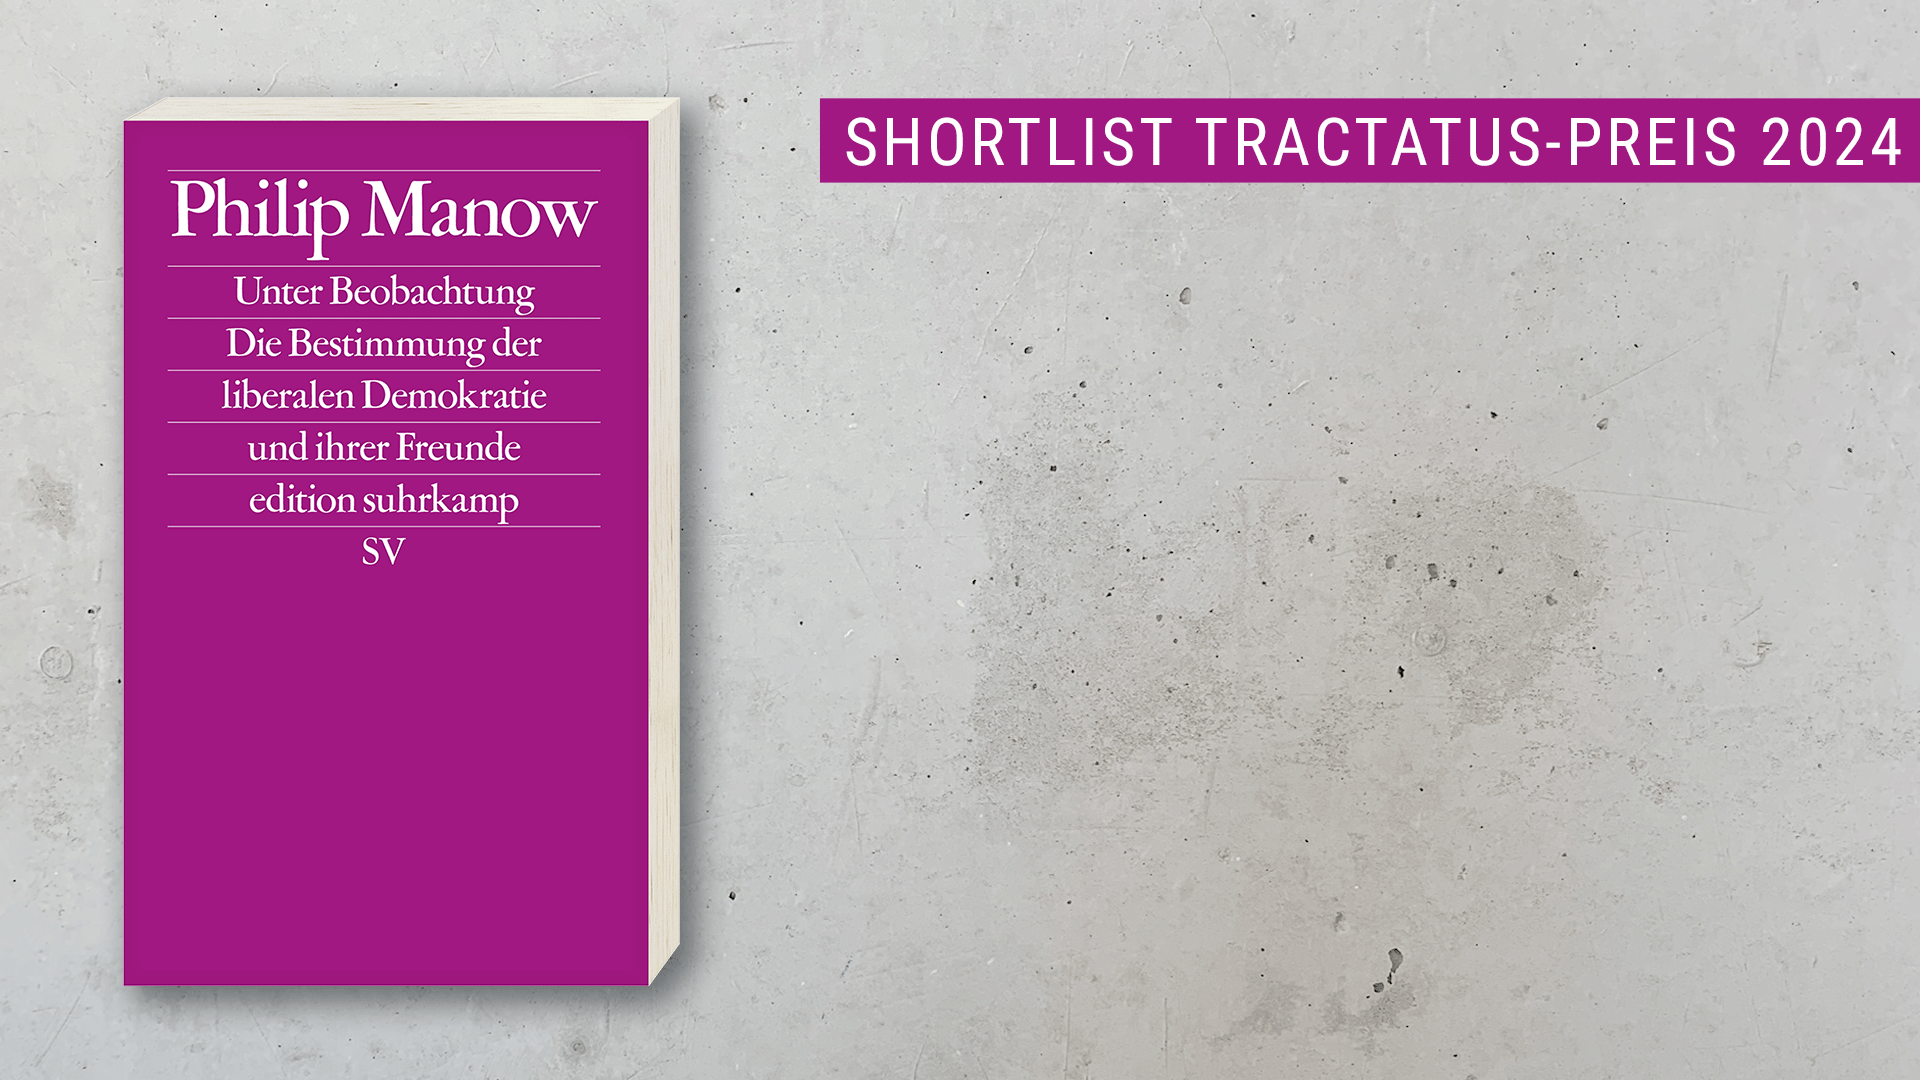 Beitrag zu Philip Manow Shortlisted for the Tractatus-Preis 2024